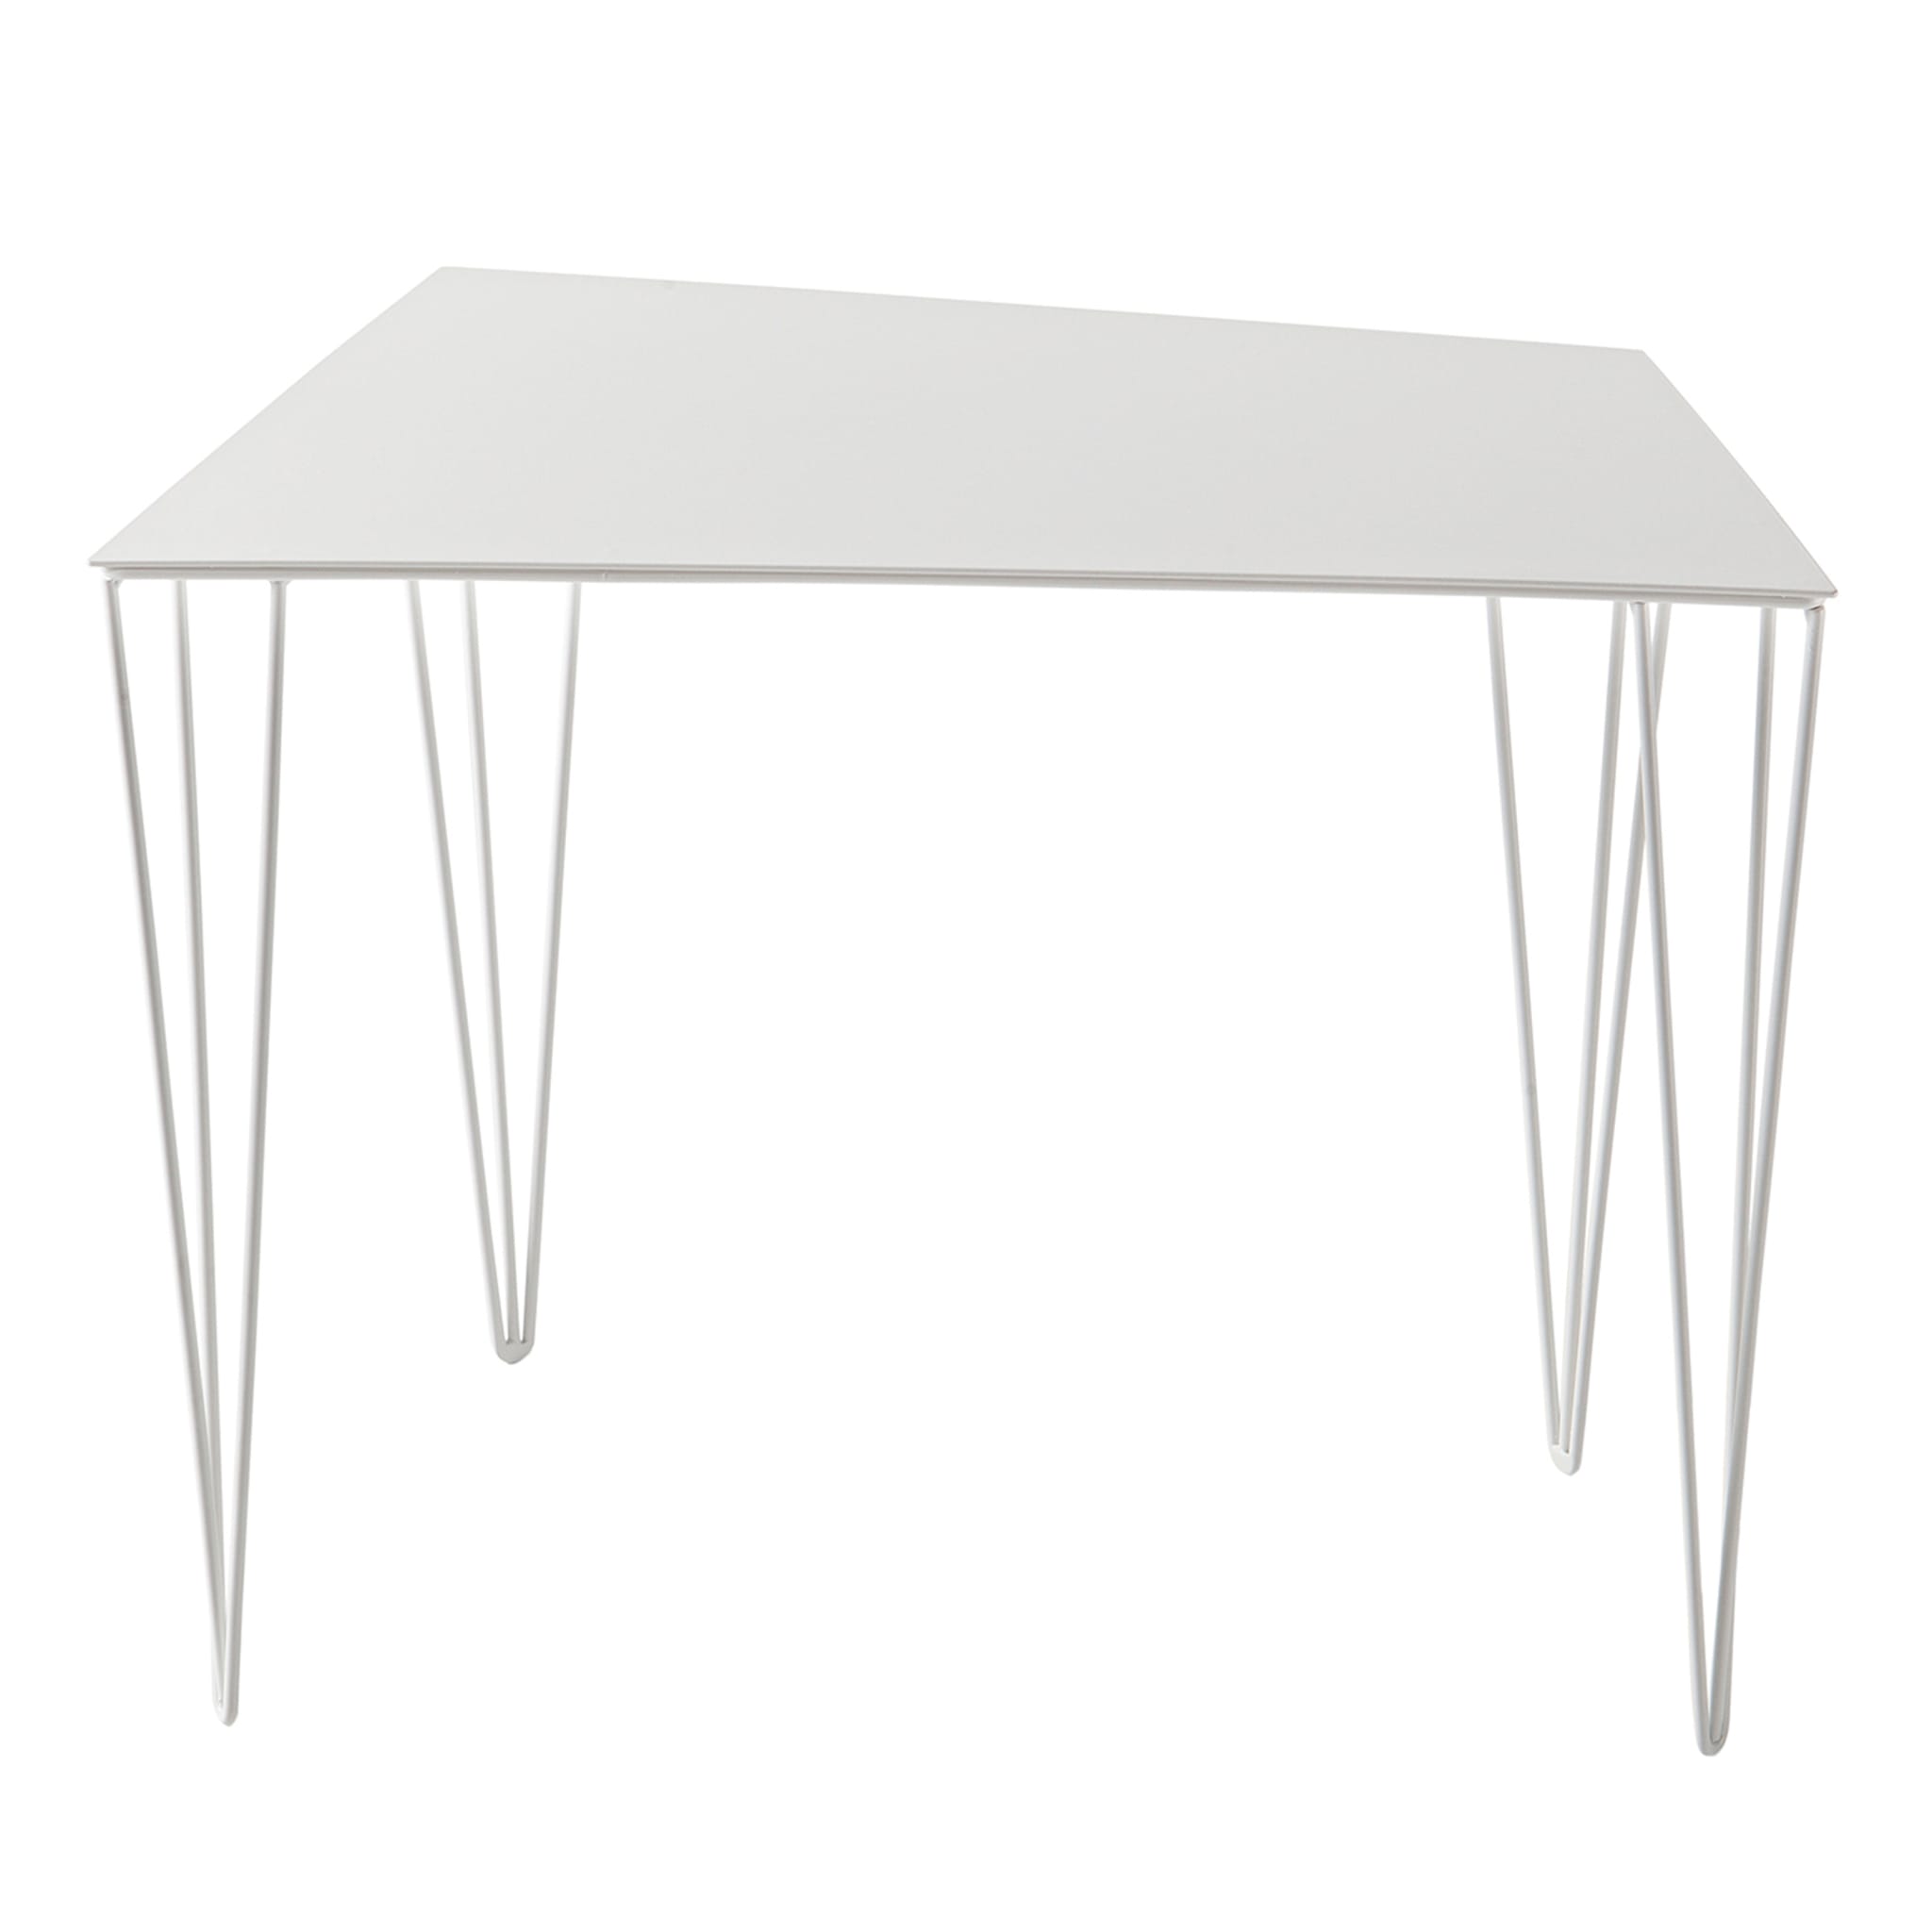 Tavolino bianco Chele #4 - Vista principale